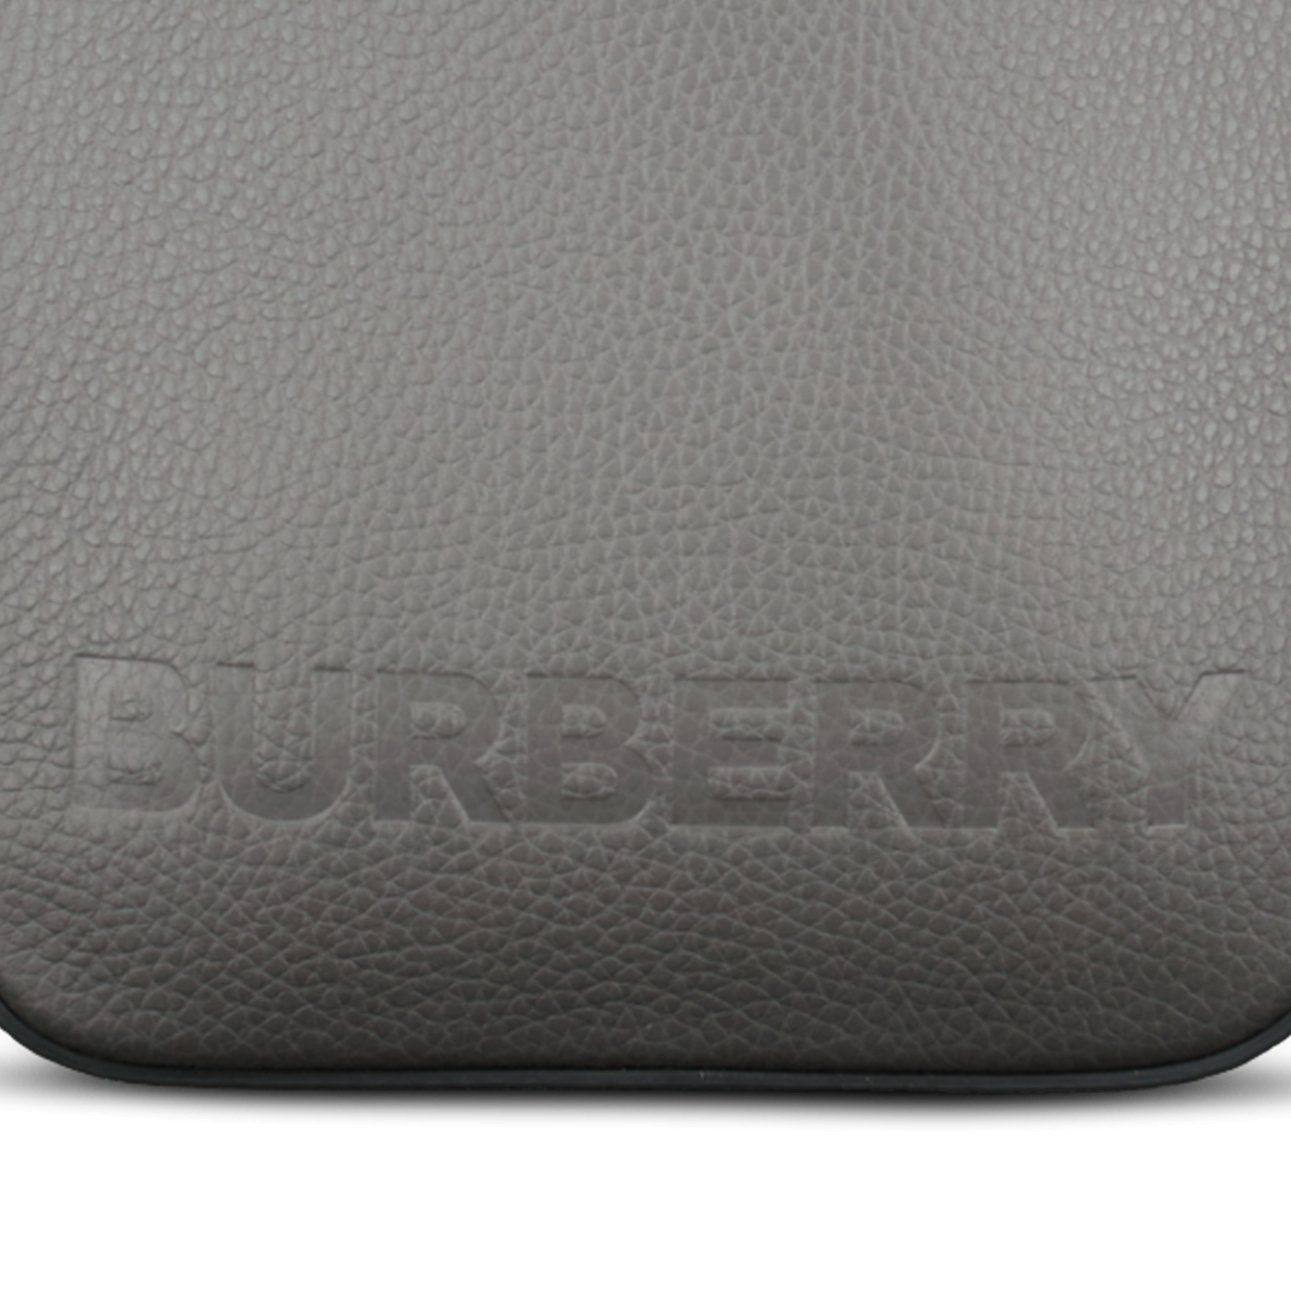 Burberry Black Embossed Leather Thornton Small Crossbody Bag